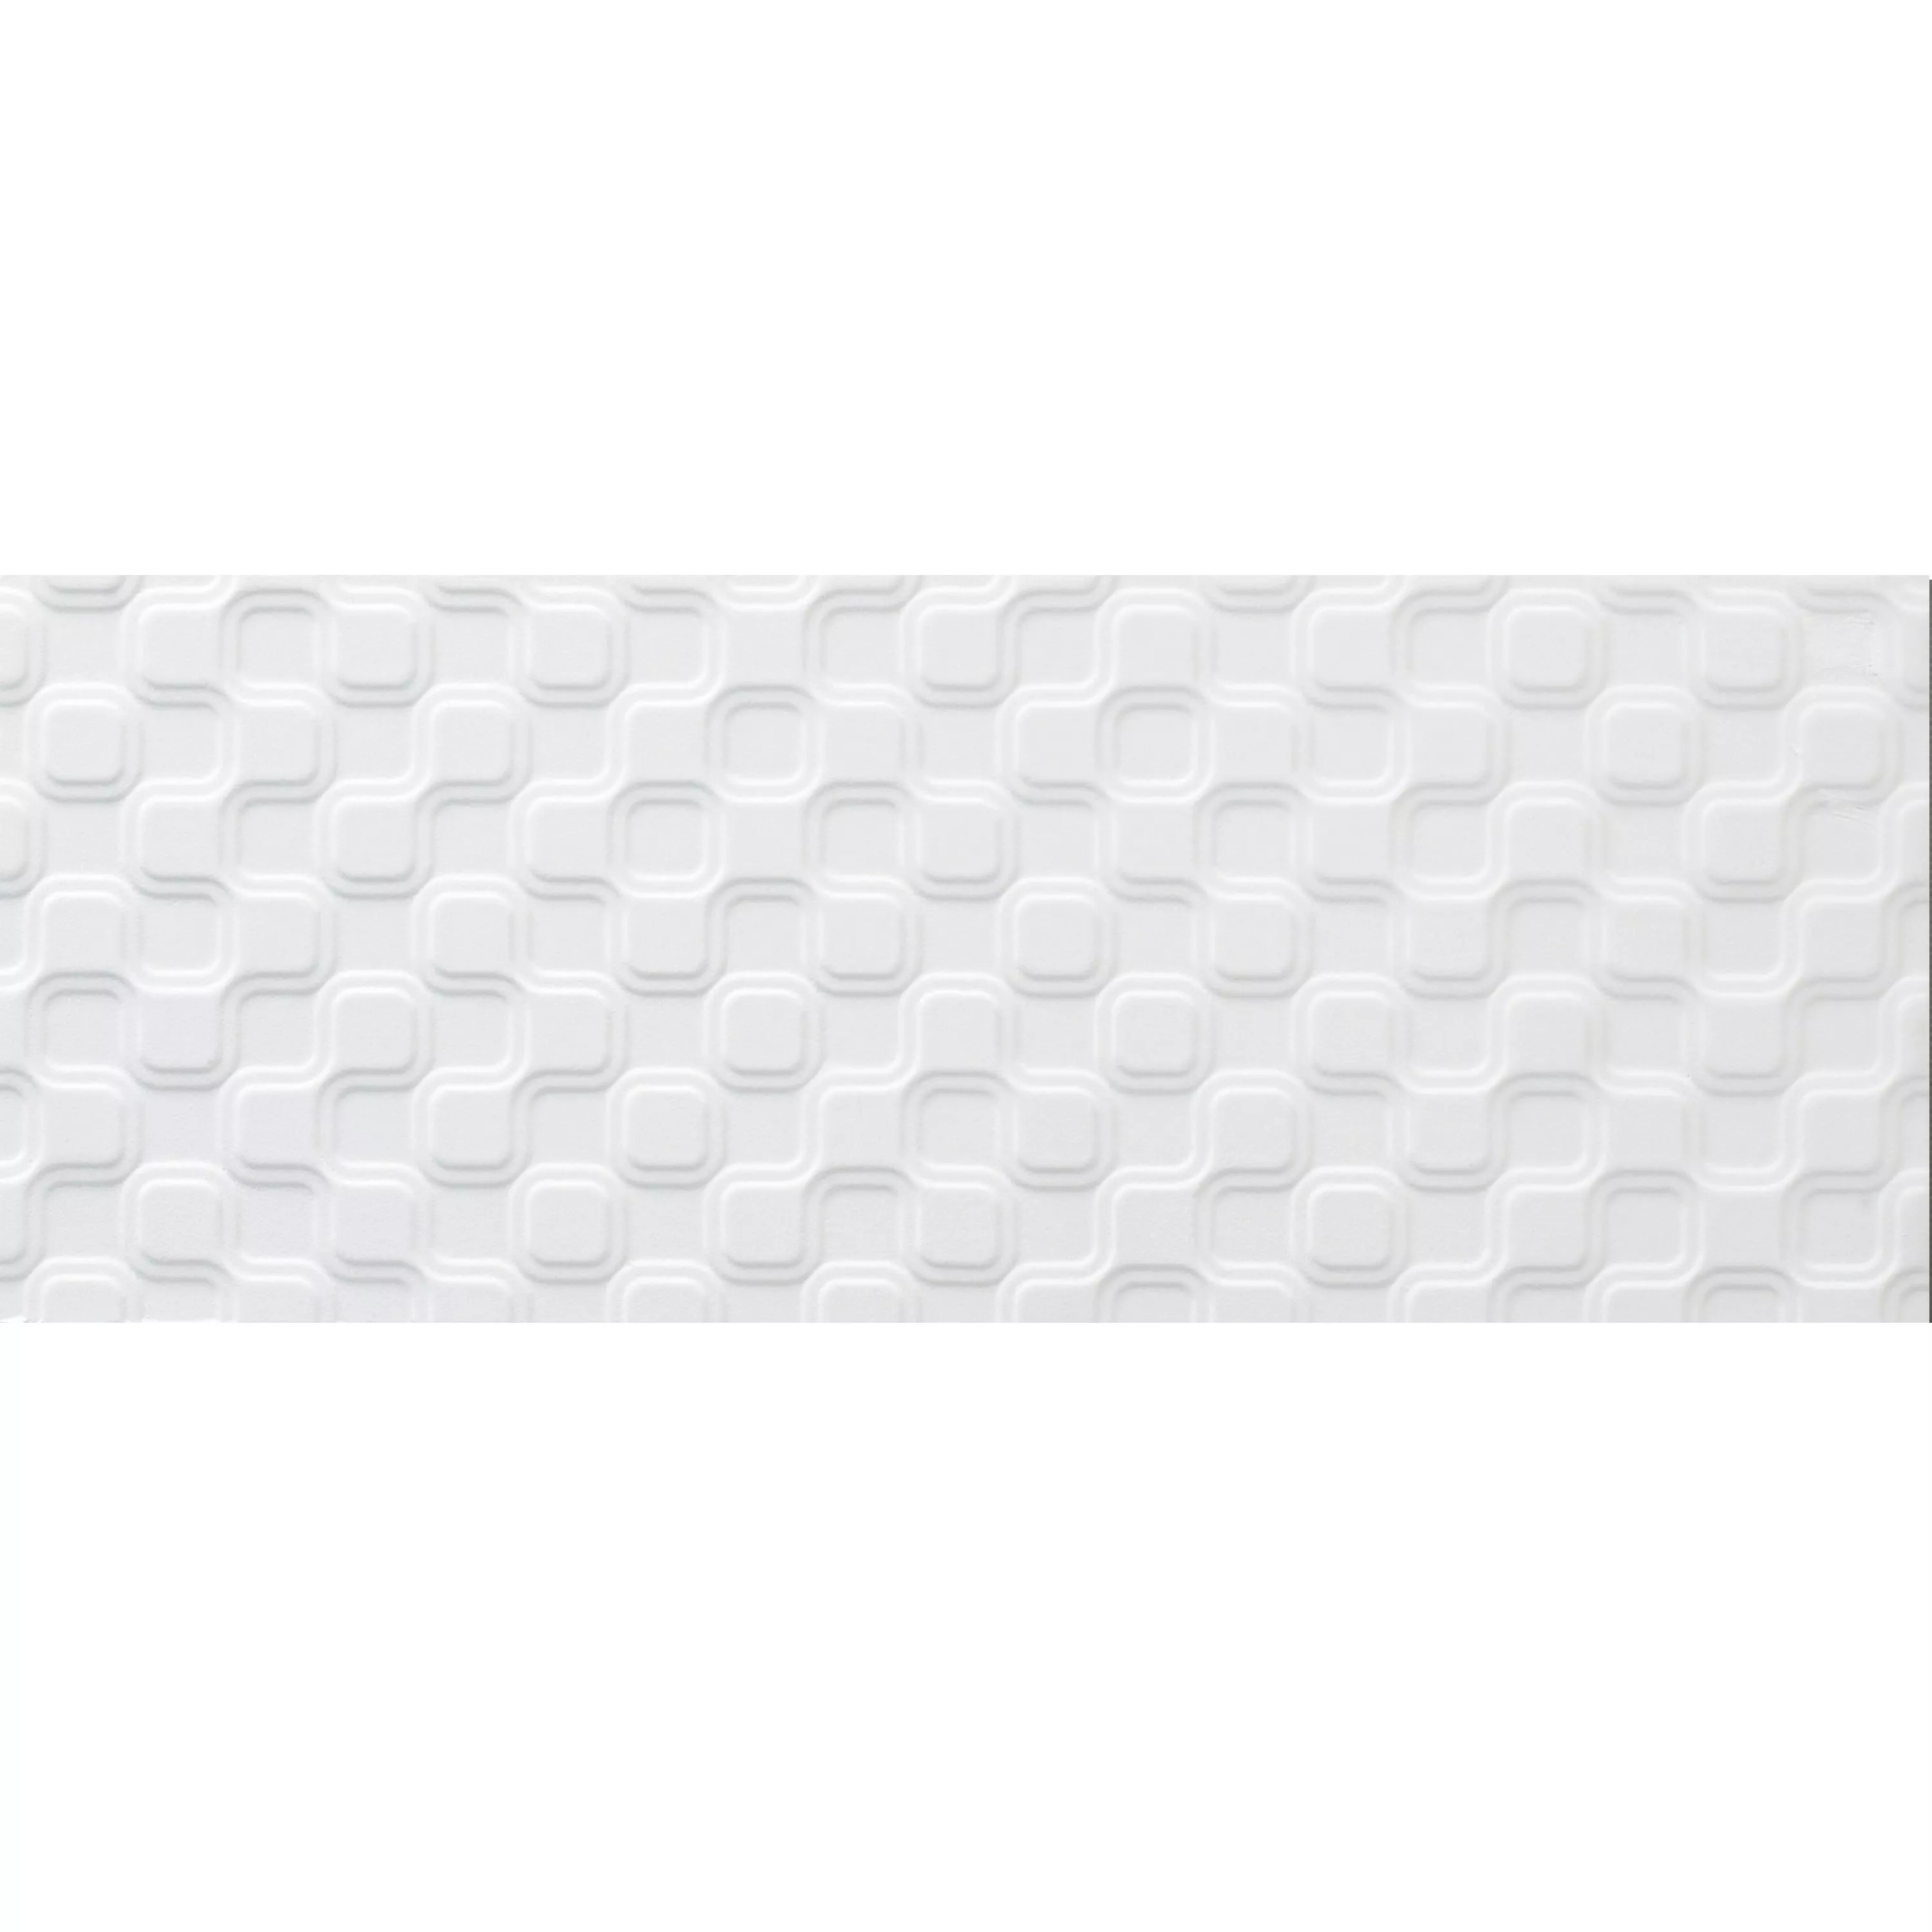 Sample Wall Tiles Swissland Nano Mat 15x40cm White